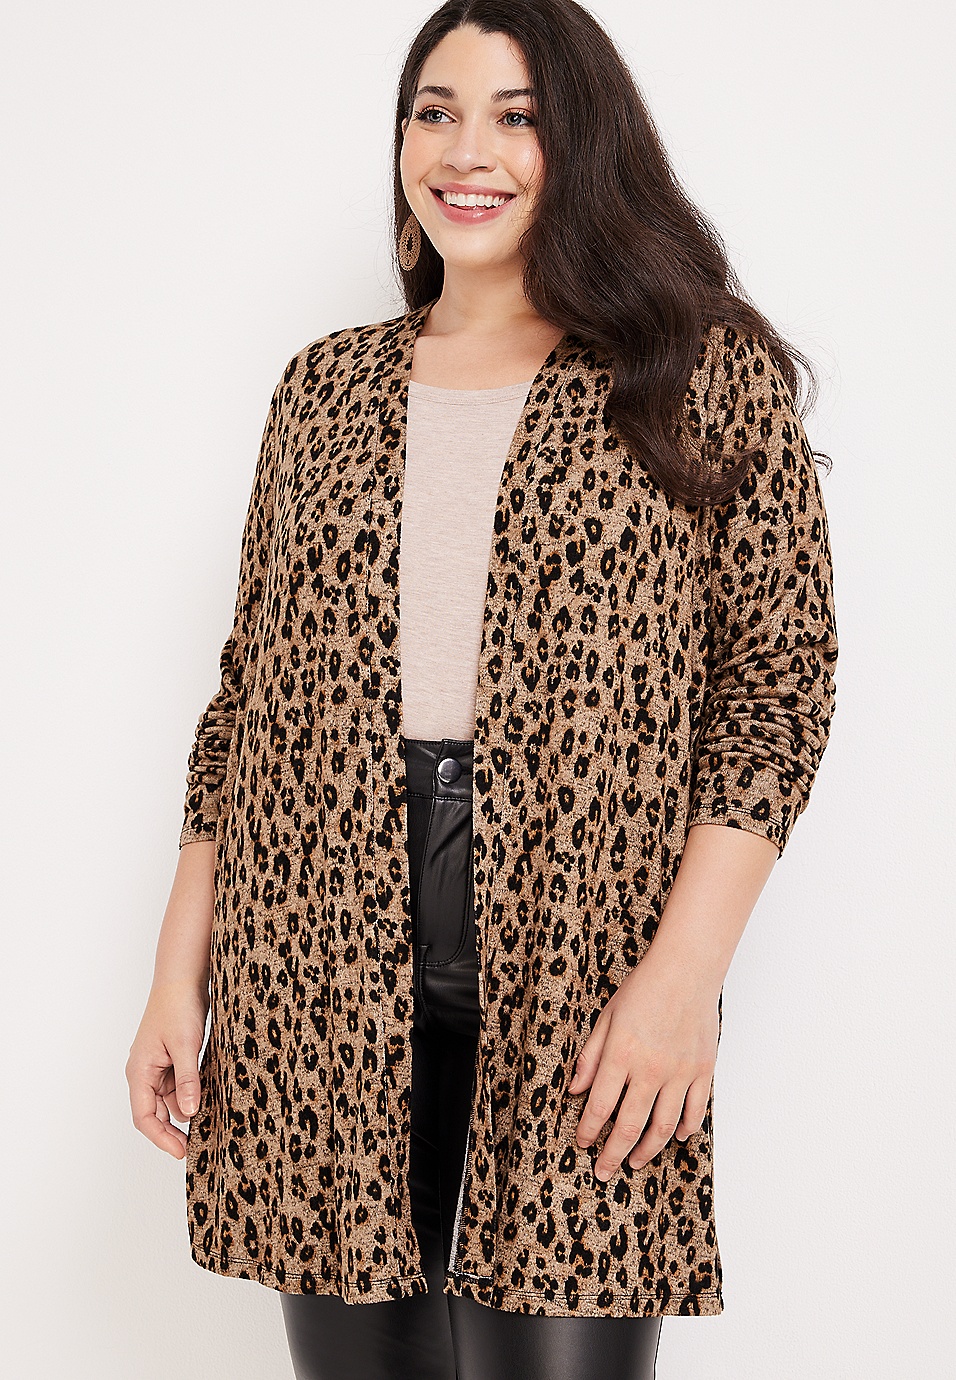 Animal Leopard Print Color Block Black Fur Coat Blazer Boyfriend